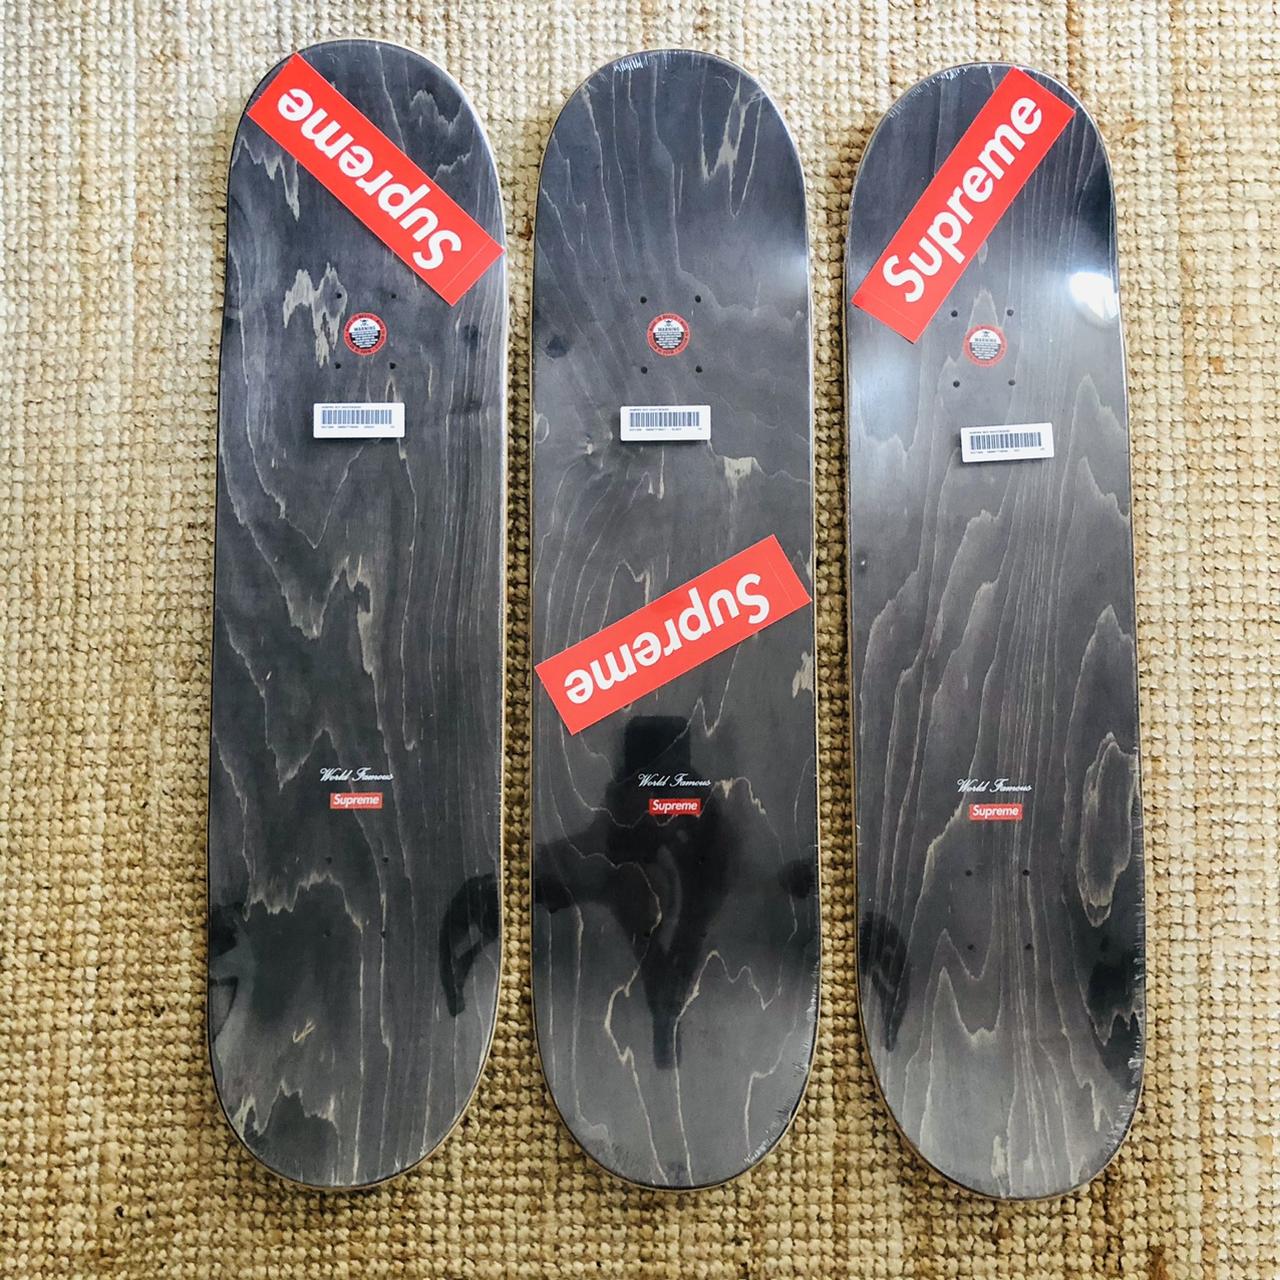 139: SEAN CLIVER X SUPREME, Eagle skateboard decks (Red and Black